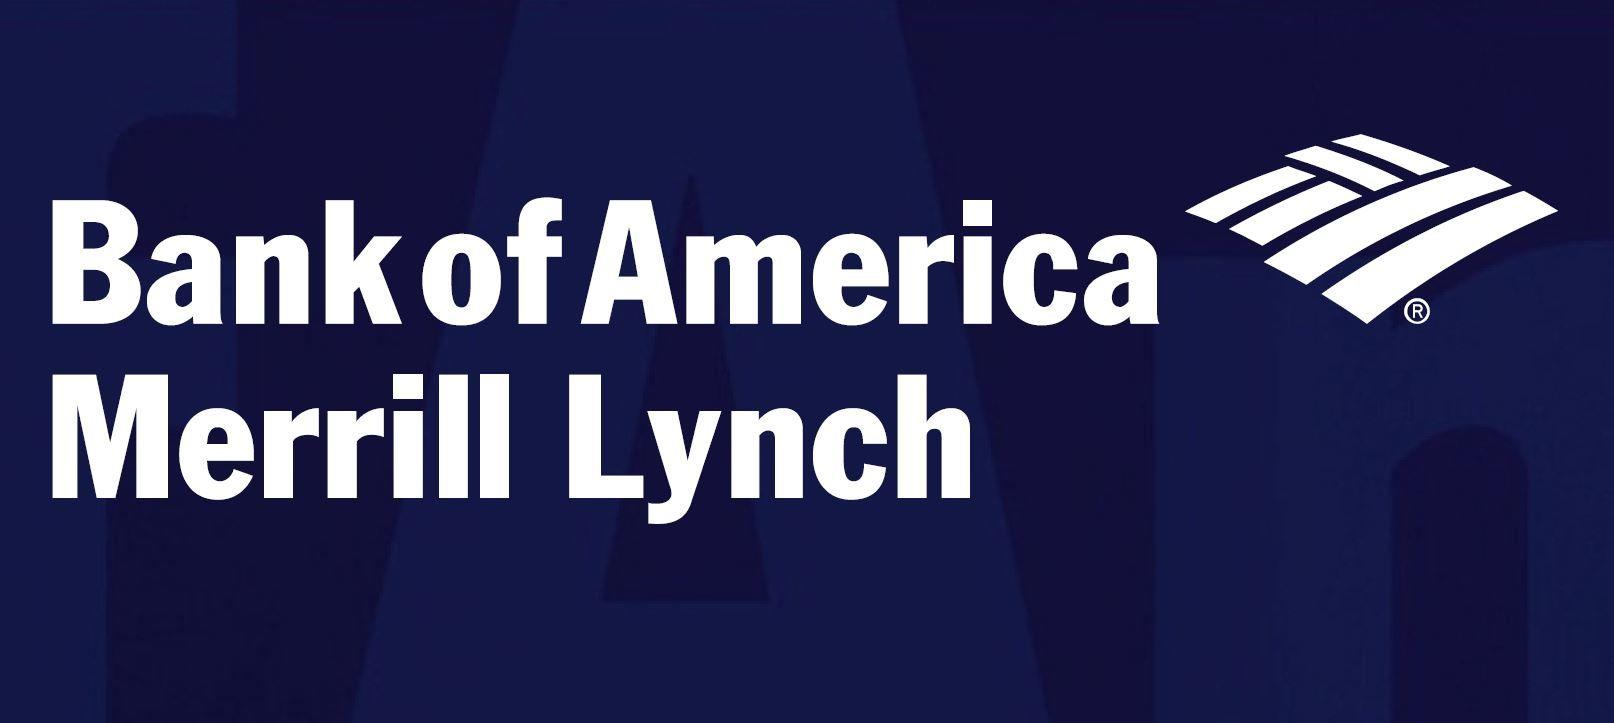 Bank of America Merrill Lynch Logo - Avascent's John Niehaus at the BofA Lynch 2014 Defense